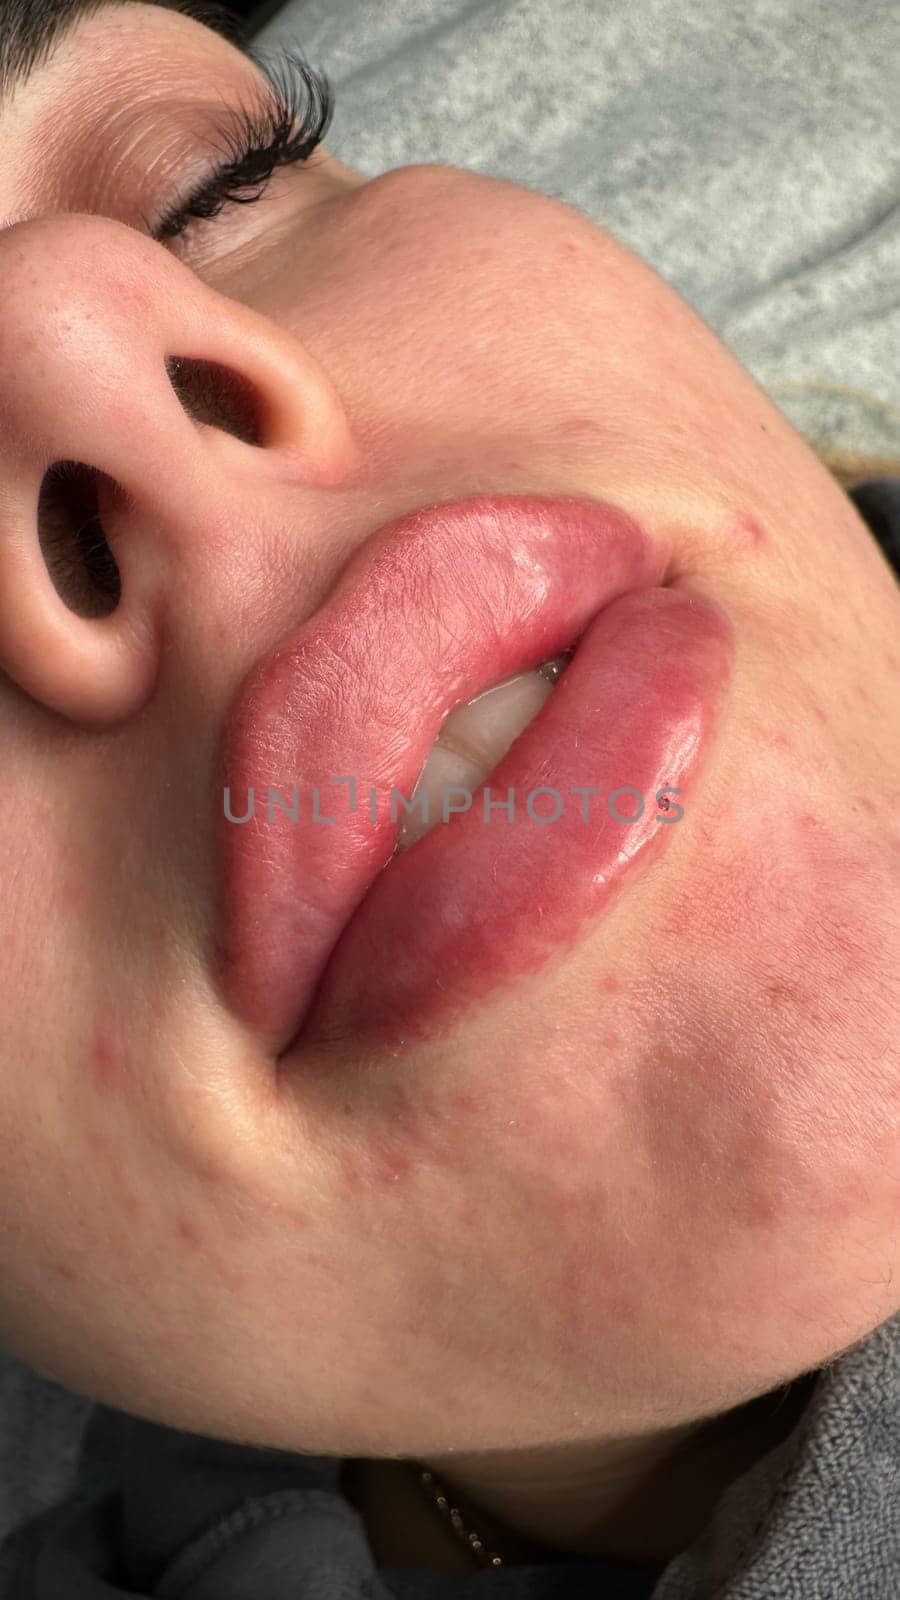 Lush, plump lips. Beautiful shape. After the augmentation procedure